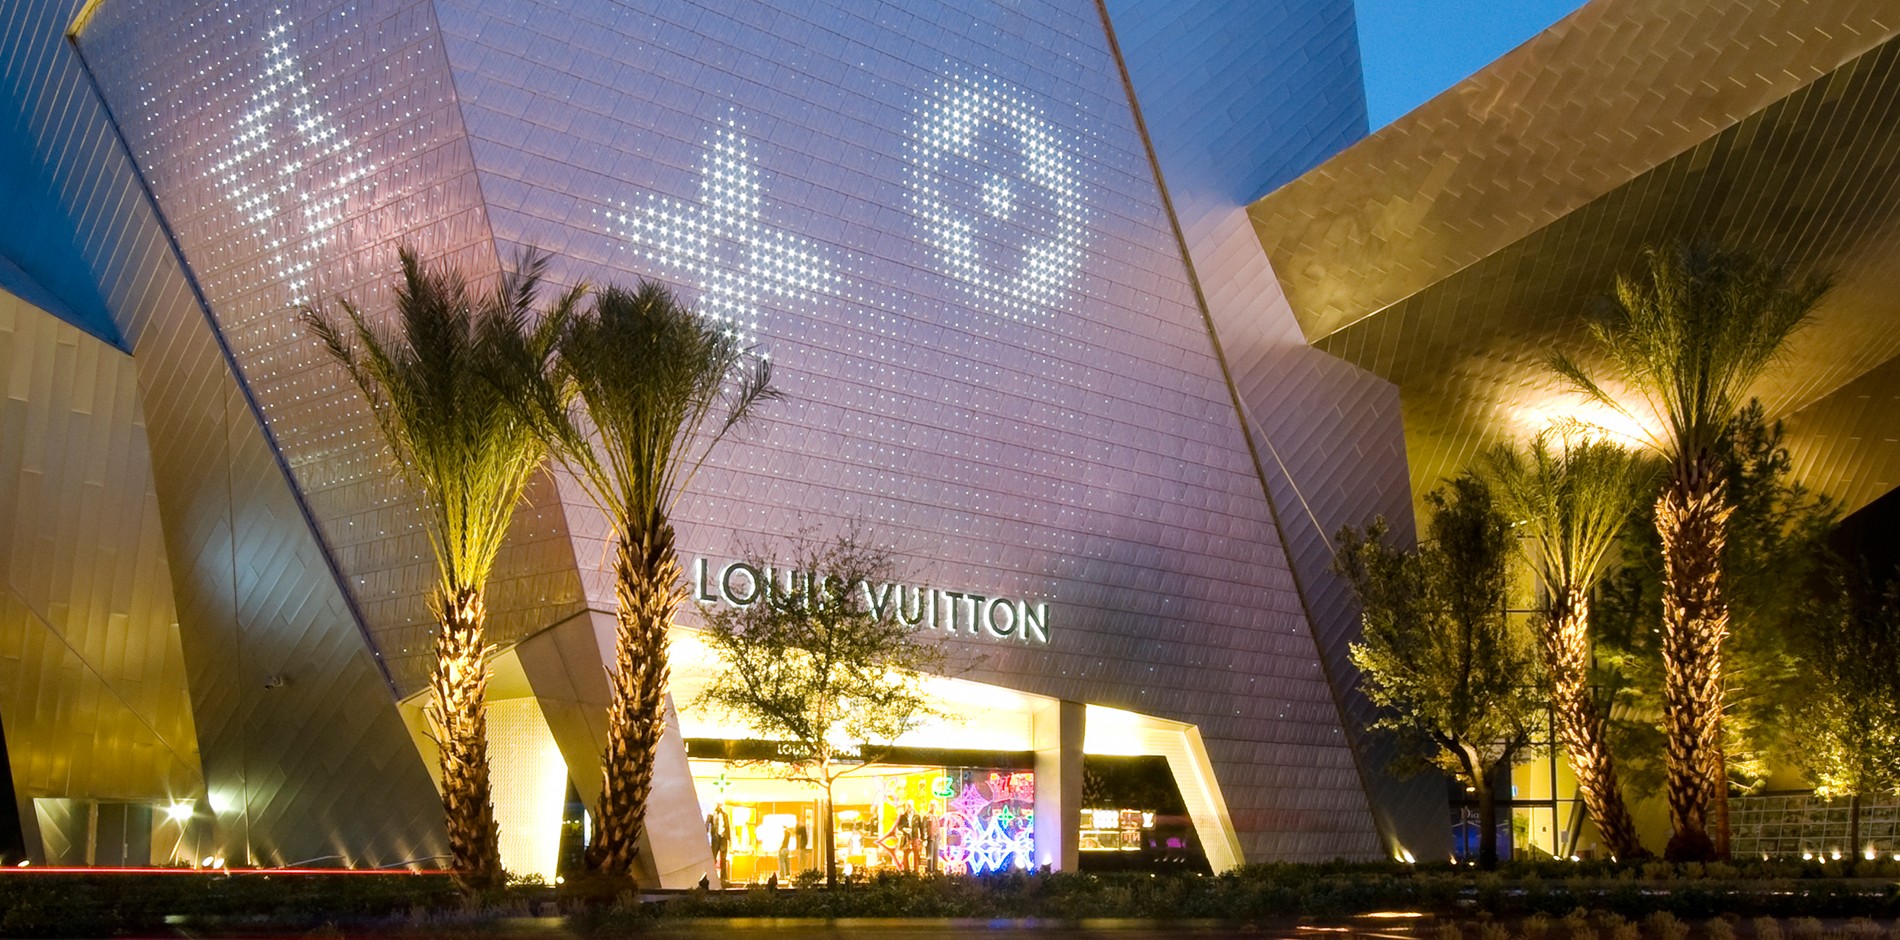 Louis Vuitton Flagship Store Las Vegas | The Art of Mike Mignola